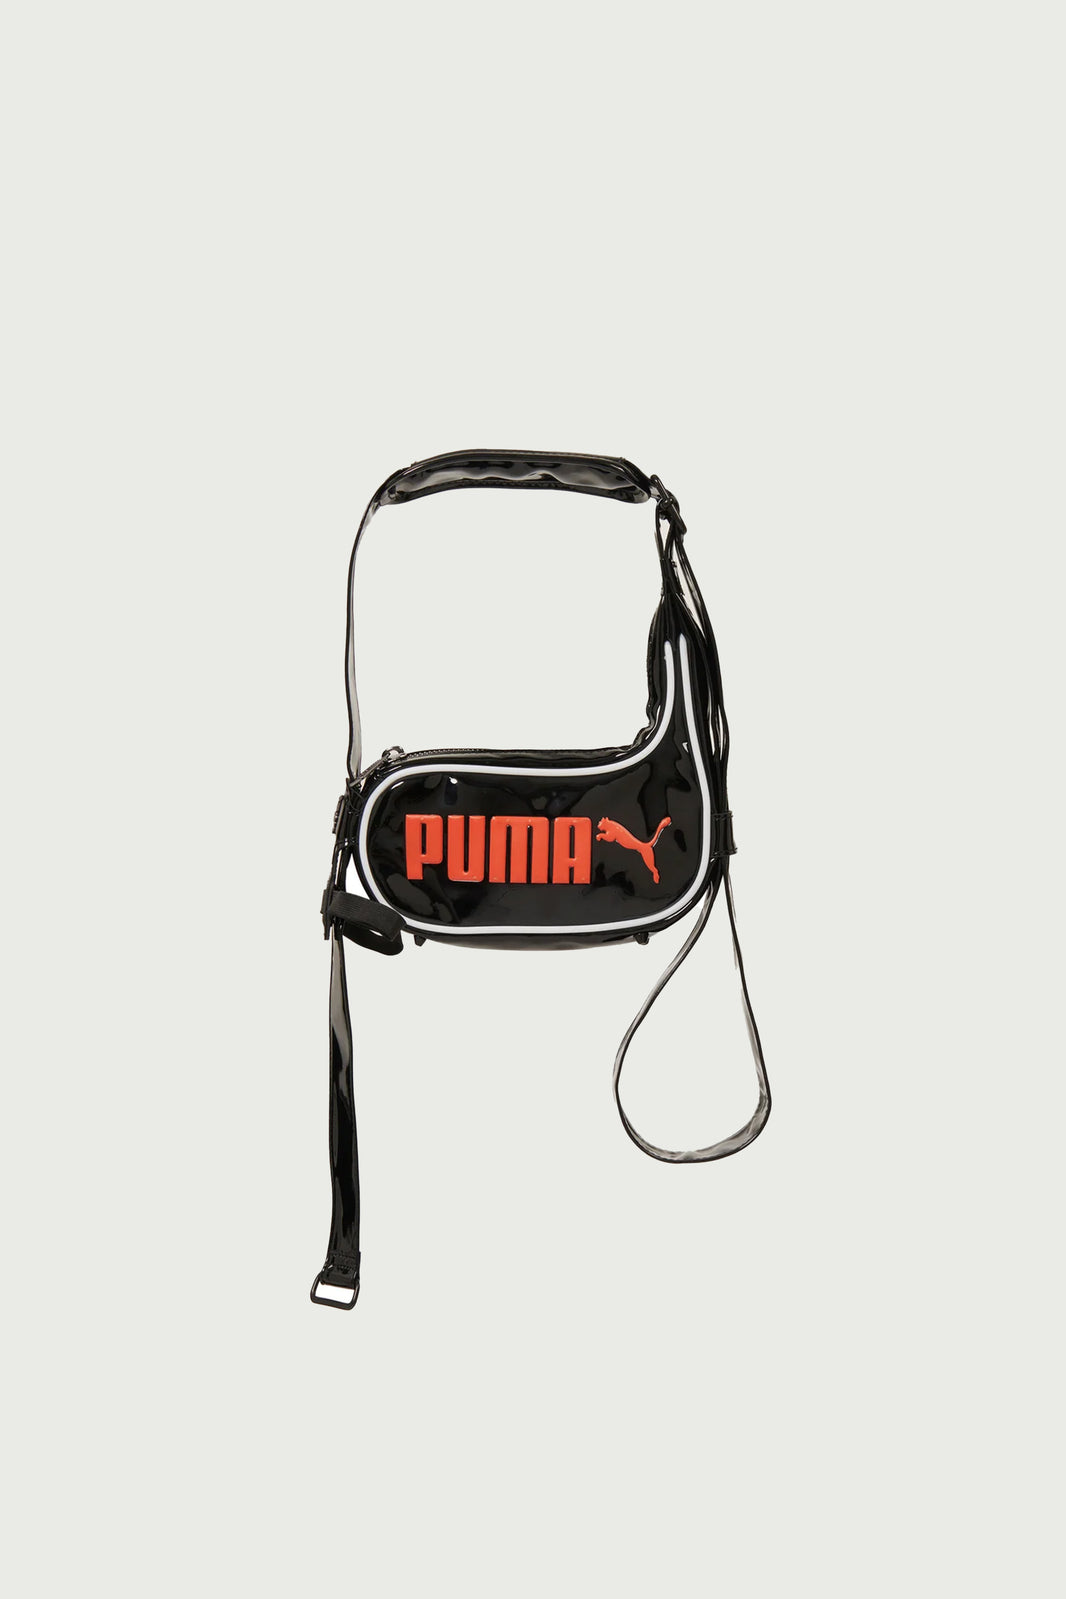 PUMA X OTTOLINGER SMALL BAG